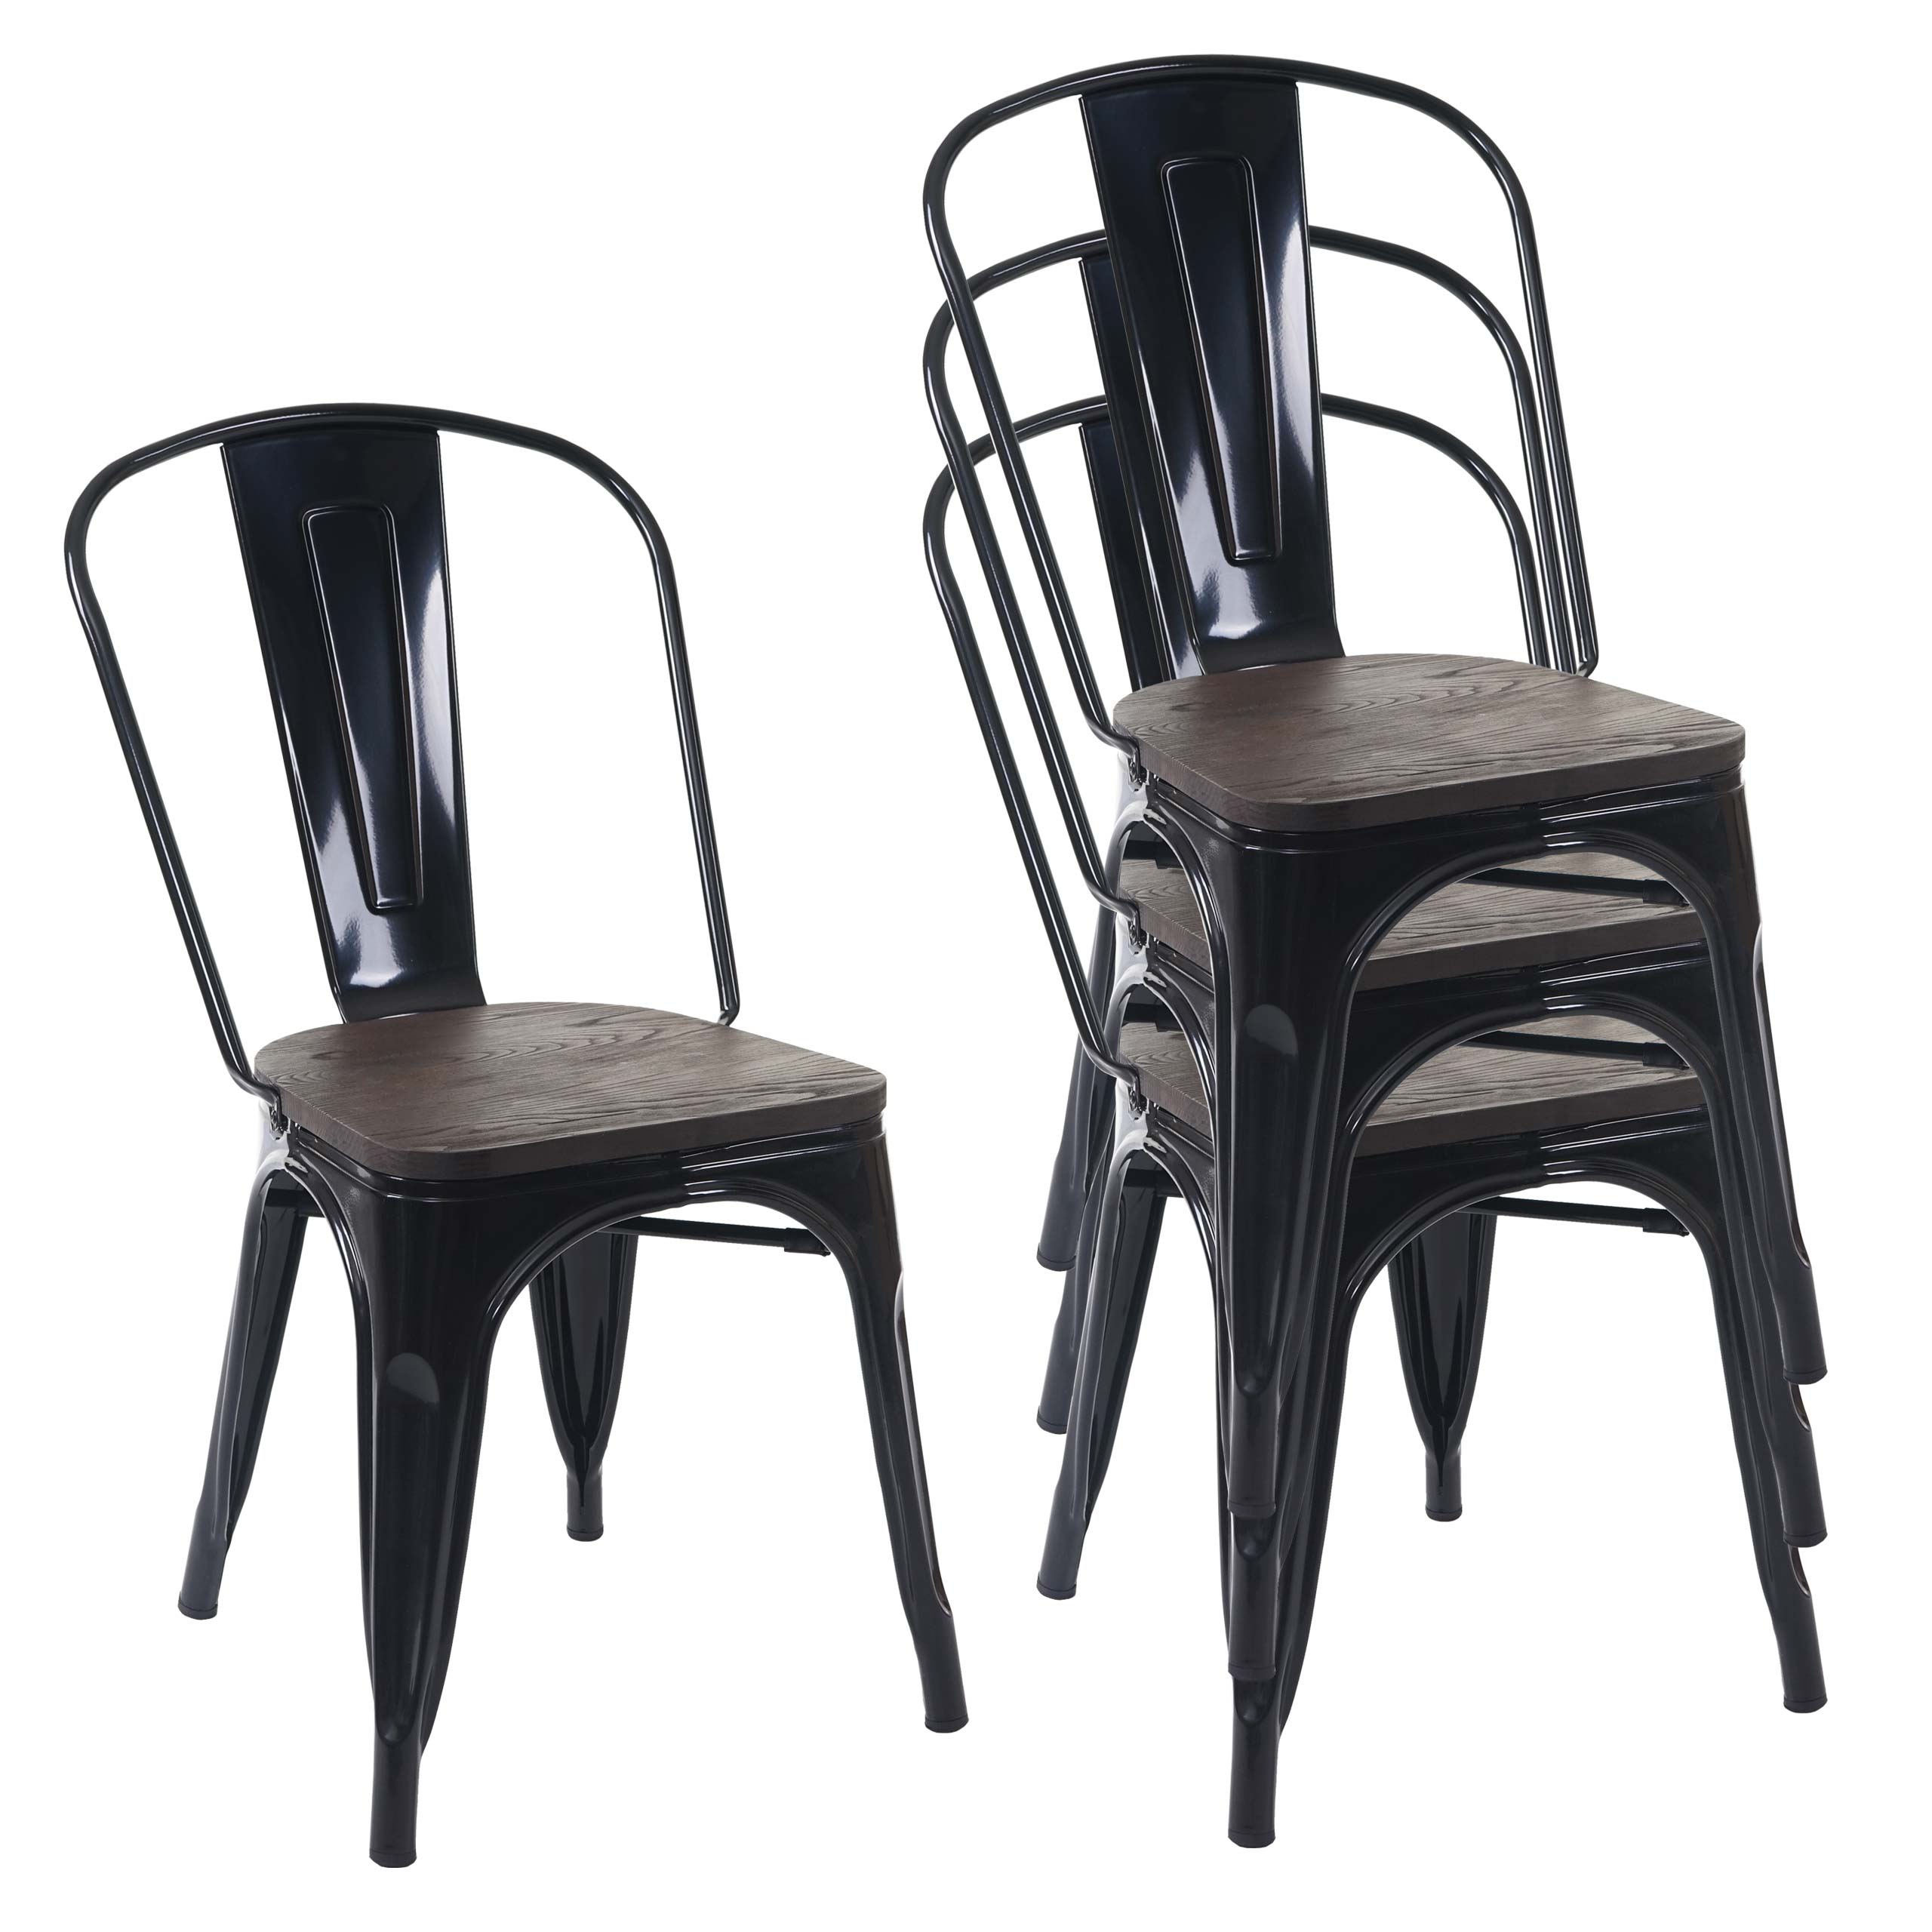 Set 4x sedie bistrot seduta legno industriale HWC-A73 metallo verniciato |  eBay